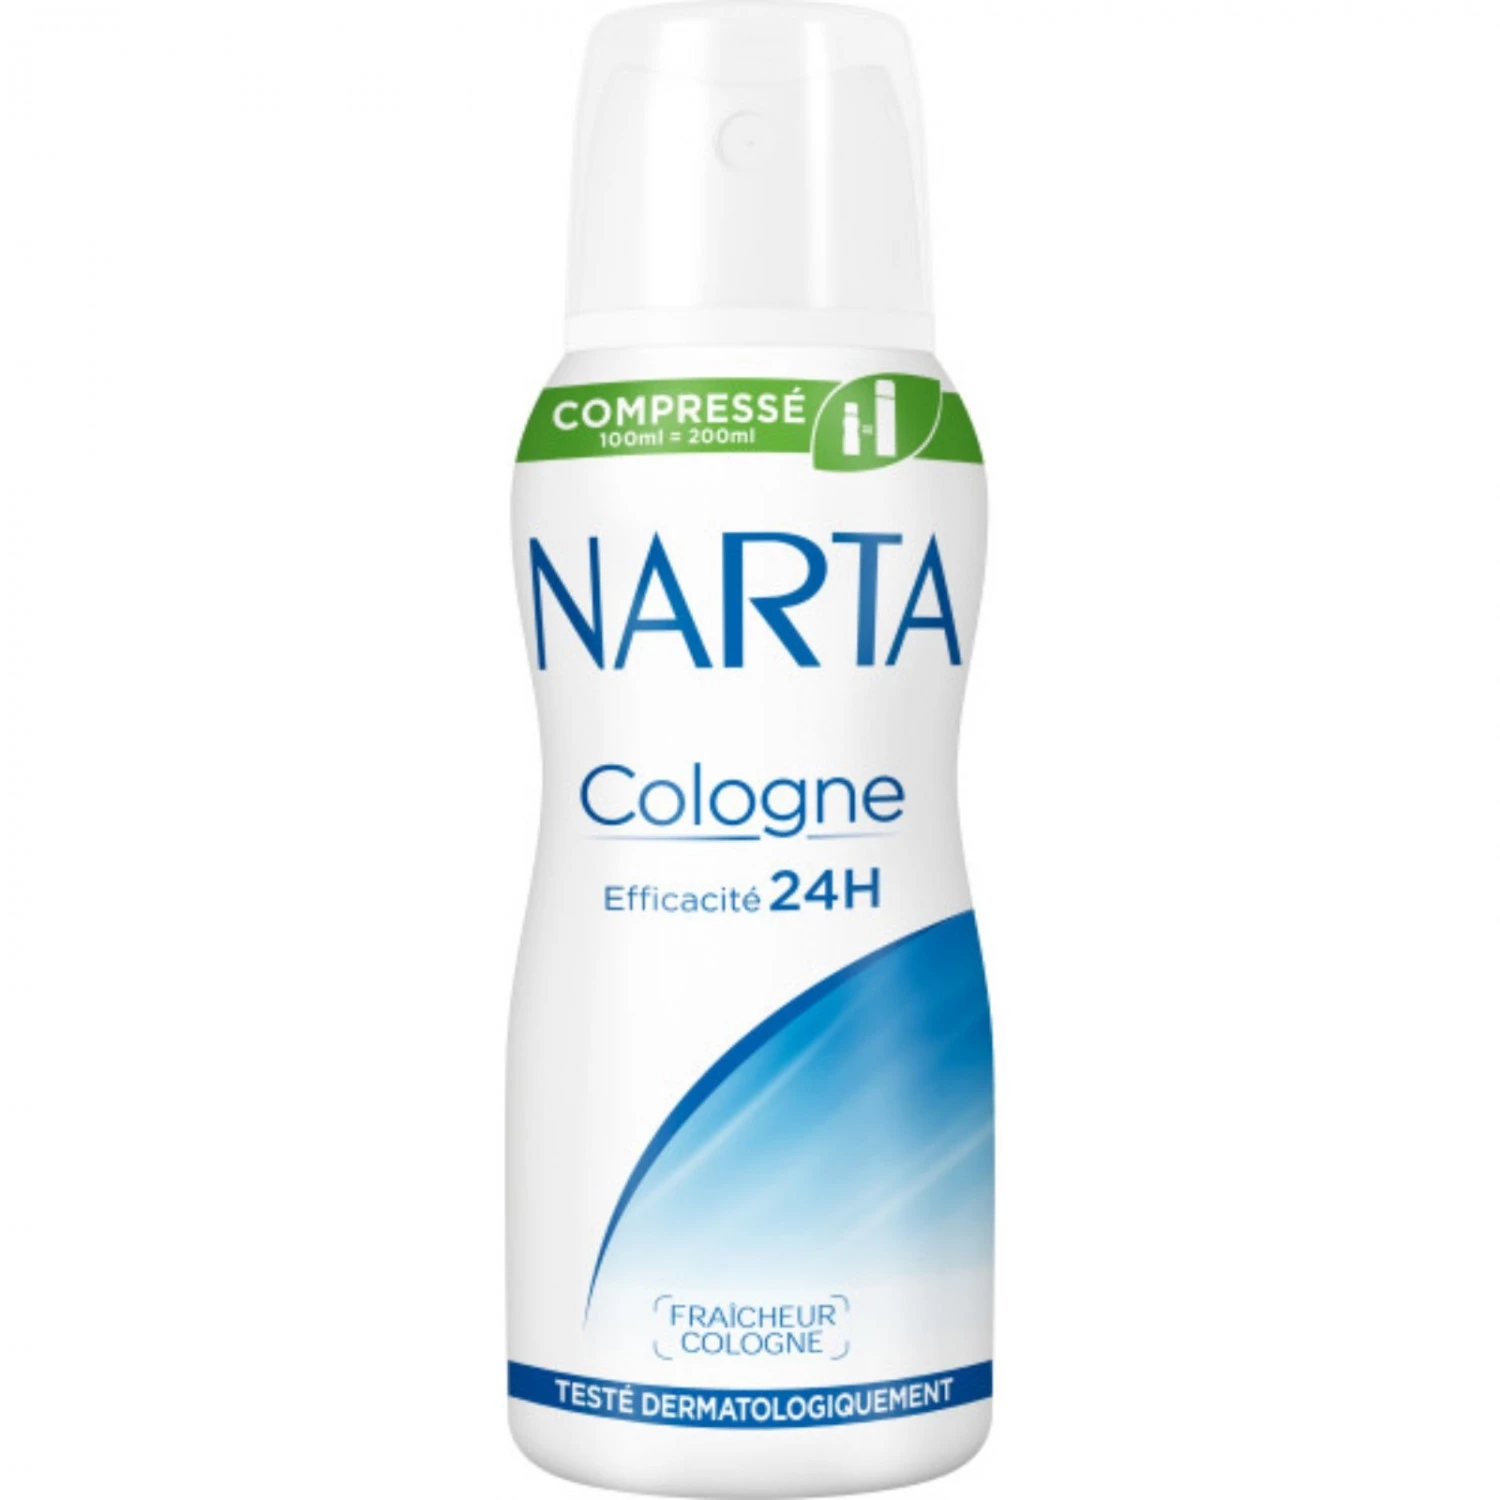 Deodorante colonia compressa 24h NARTA spray 100ml